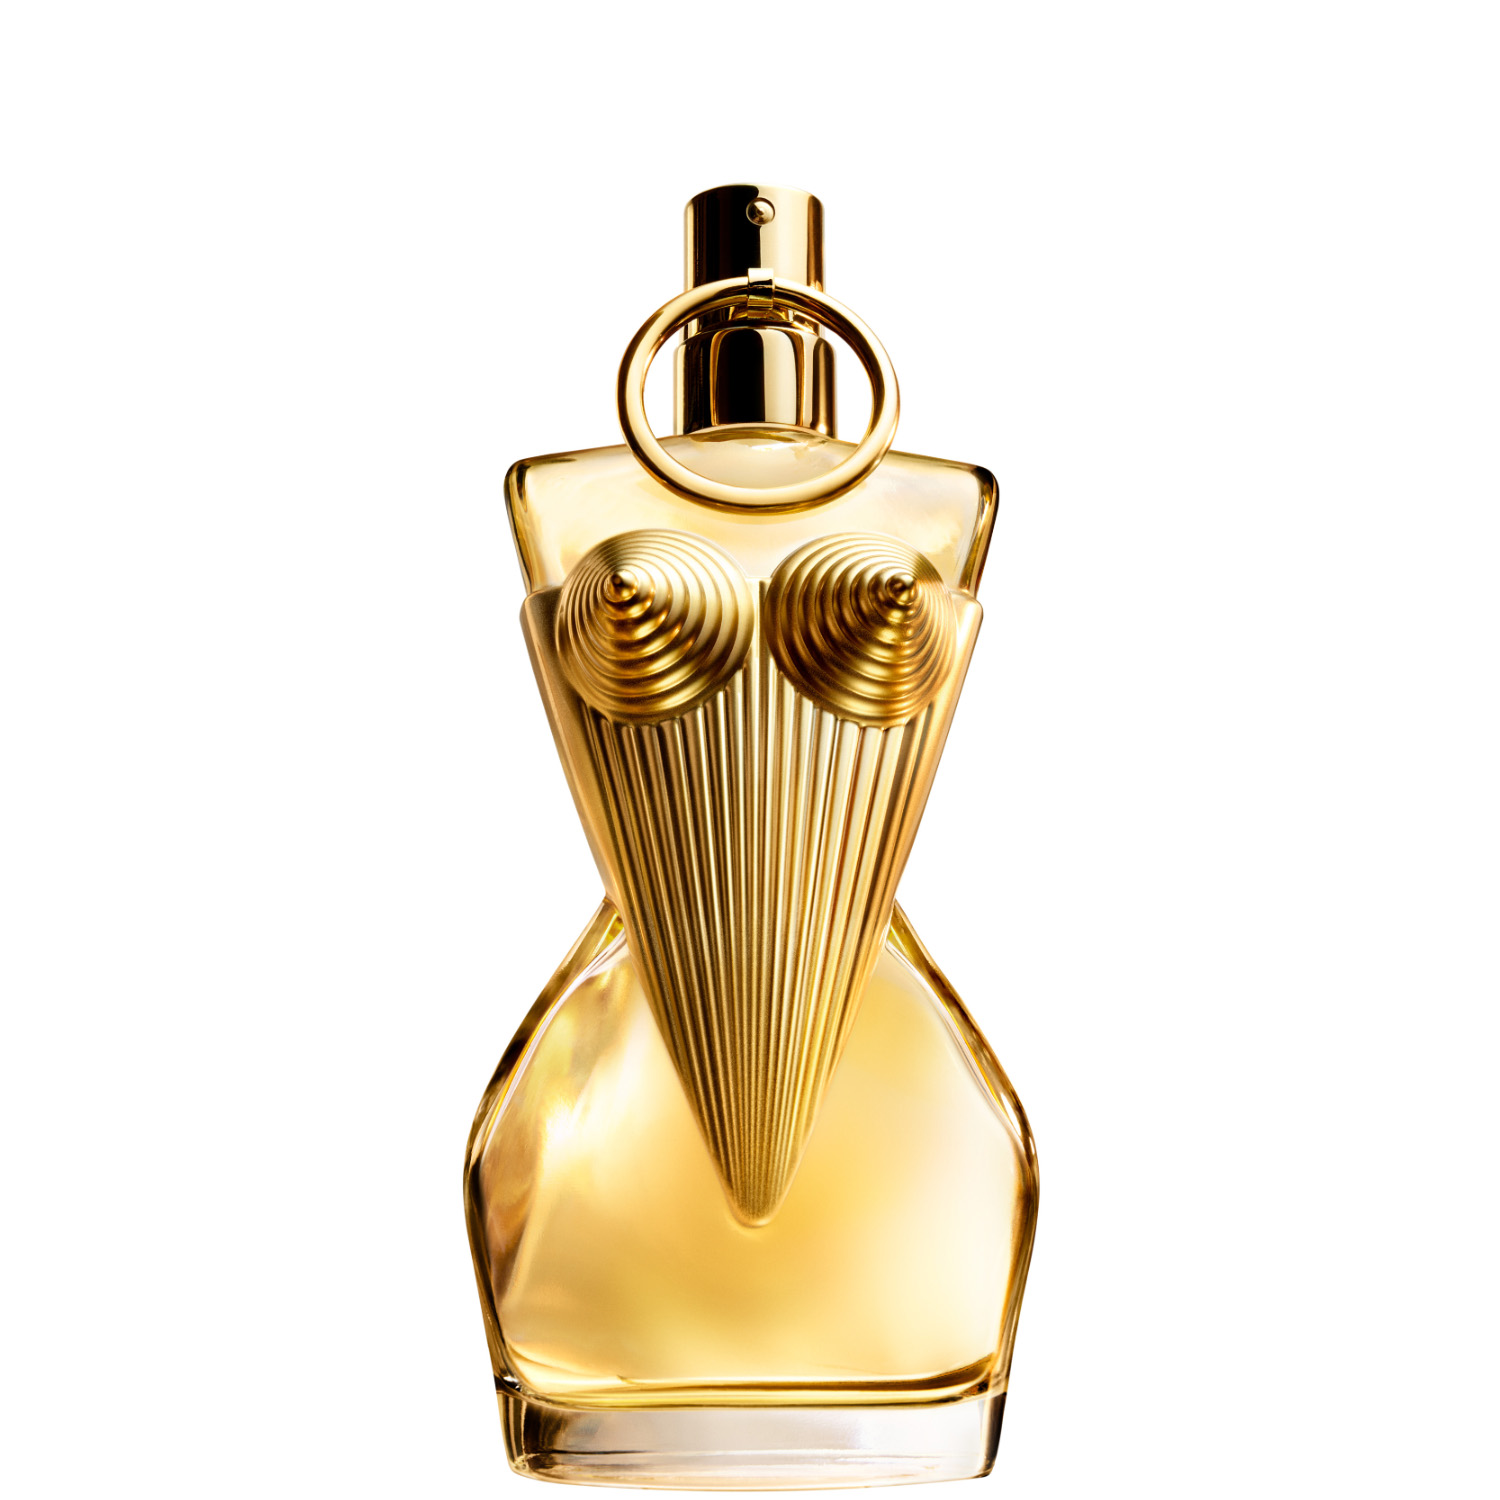 Jean Paul Gaultier Gaultier Divine Eau de Parfum 50ml Refillable